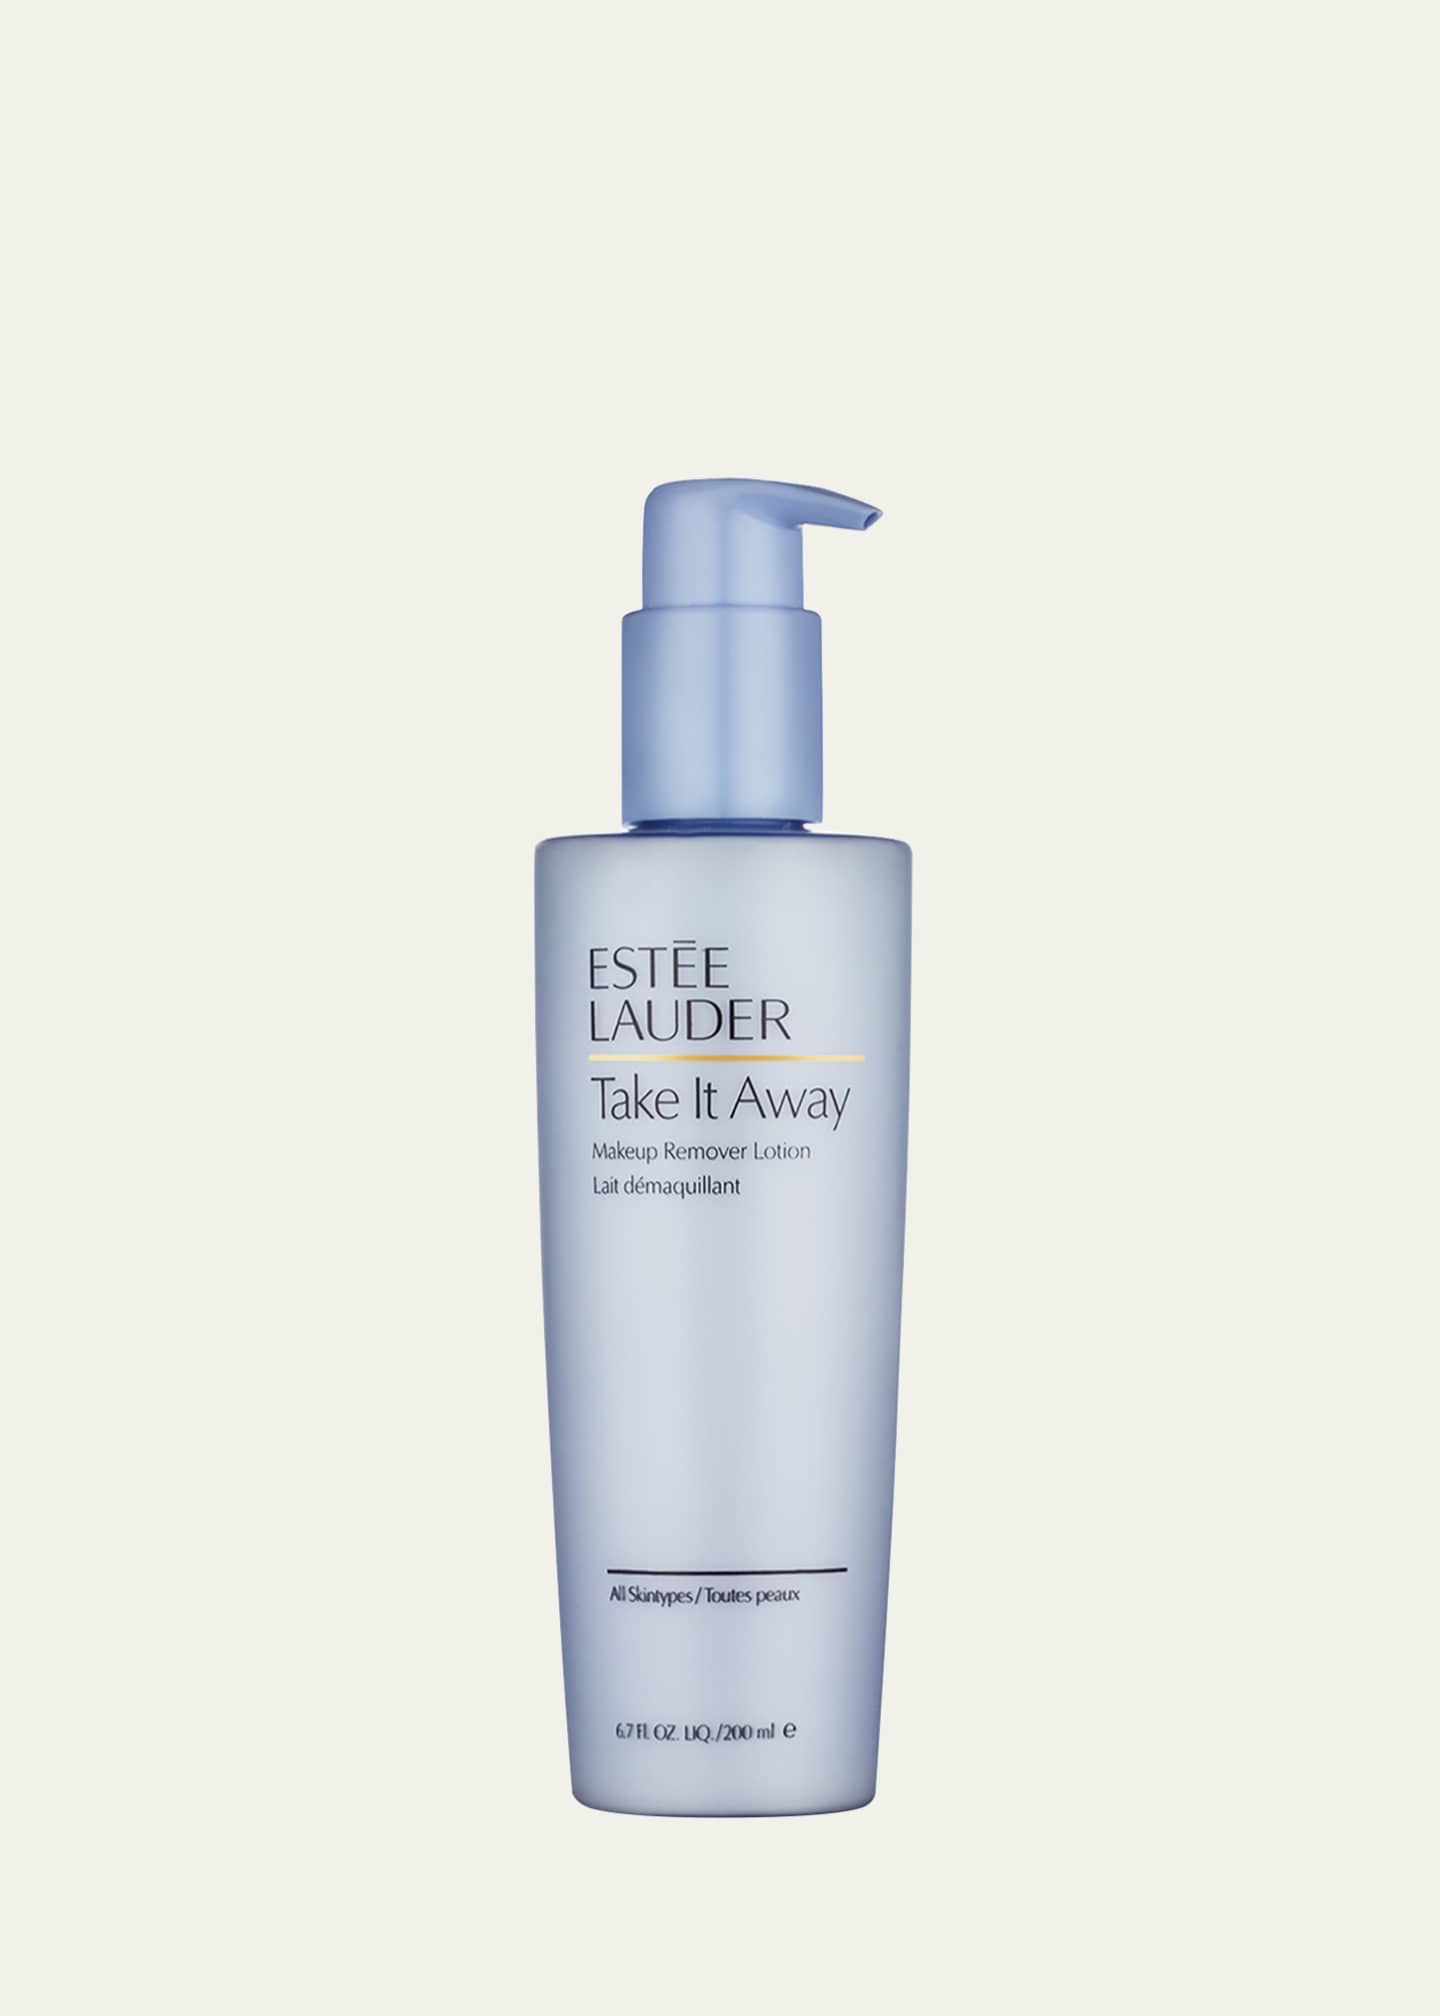 Estee Lauder Take It Away Makeup Remover Lotion, 6.7 oz.